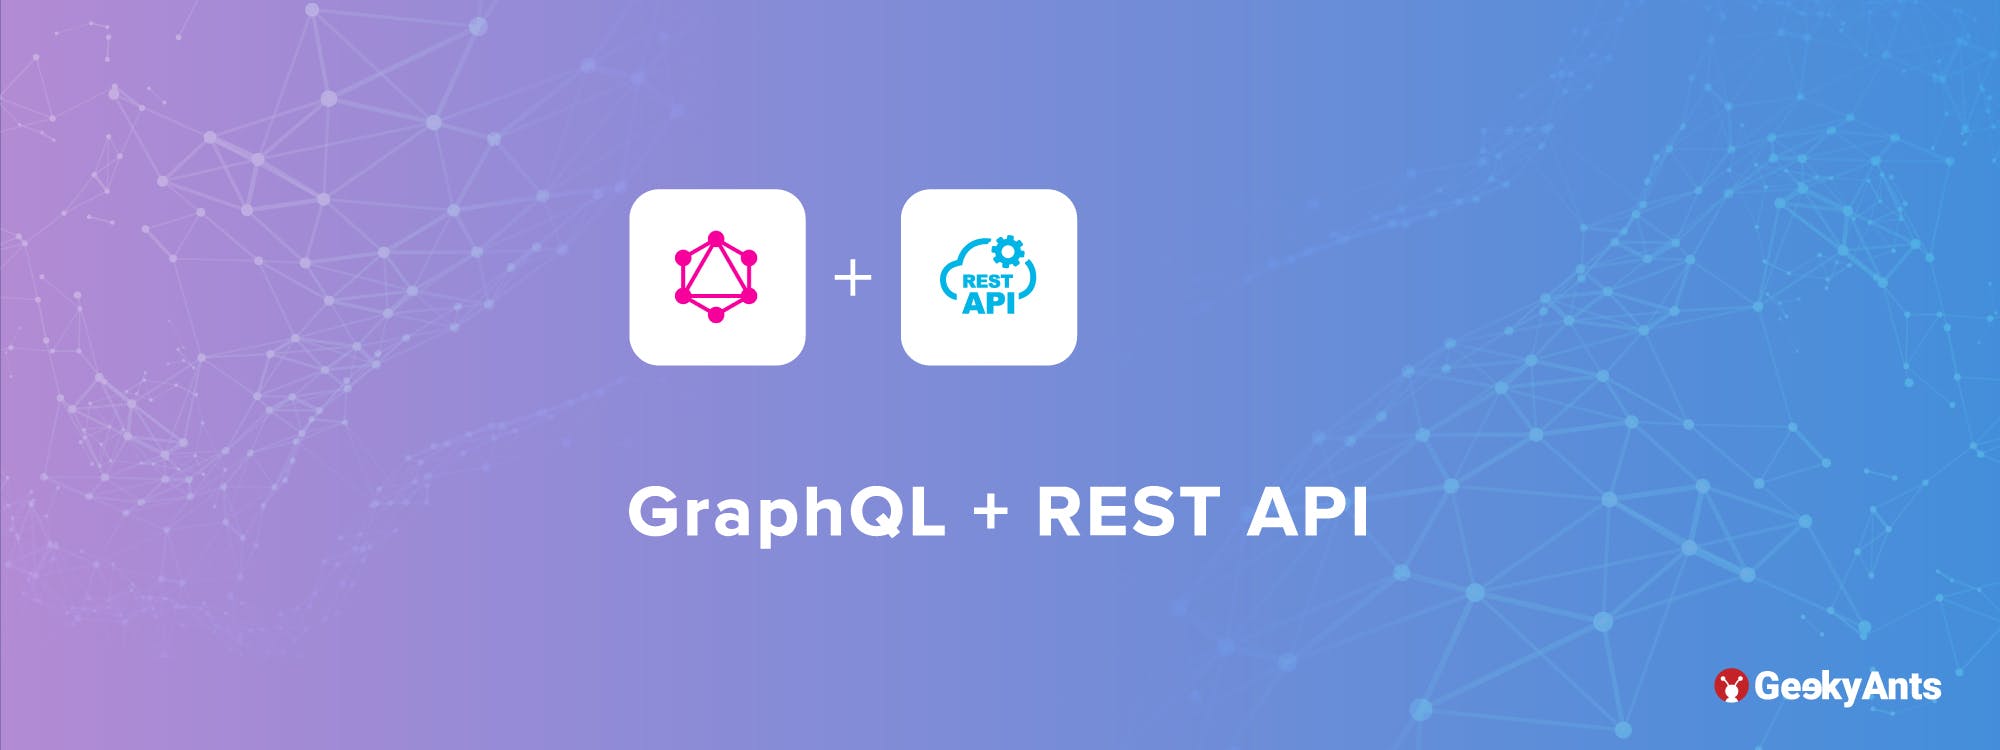 GraphQL + REST API